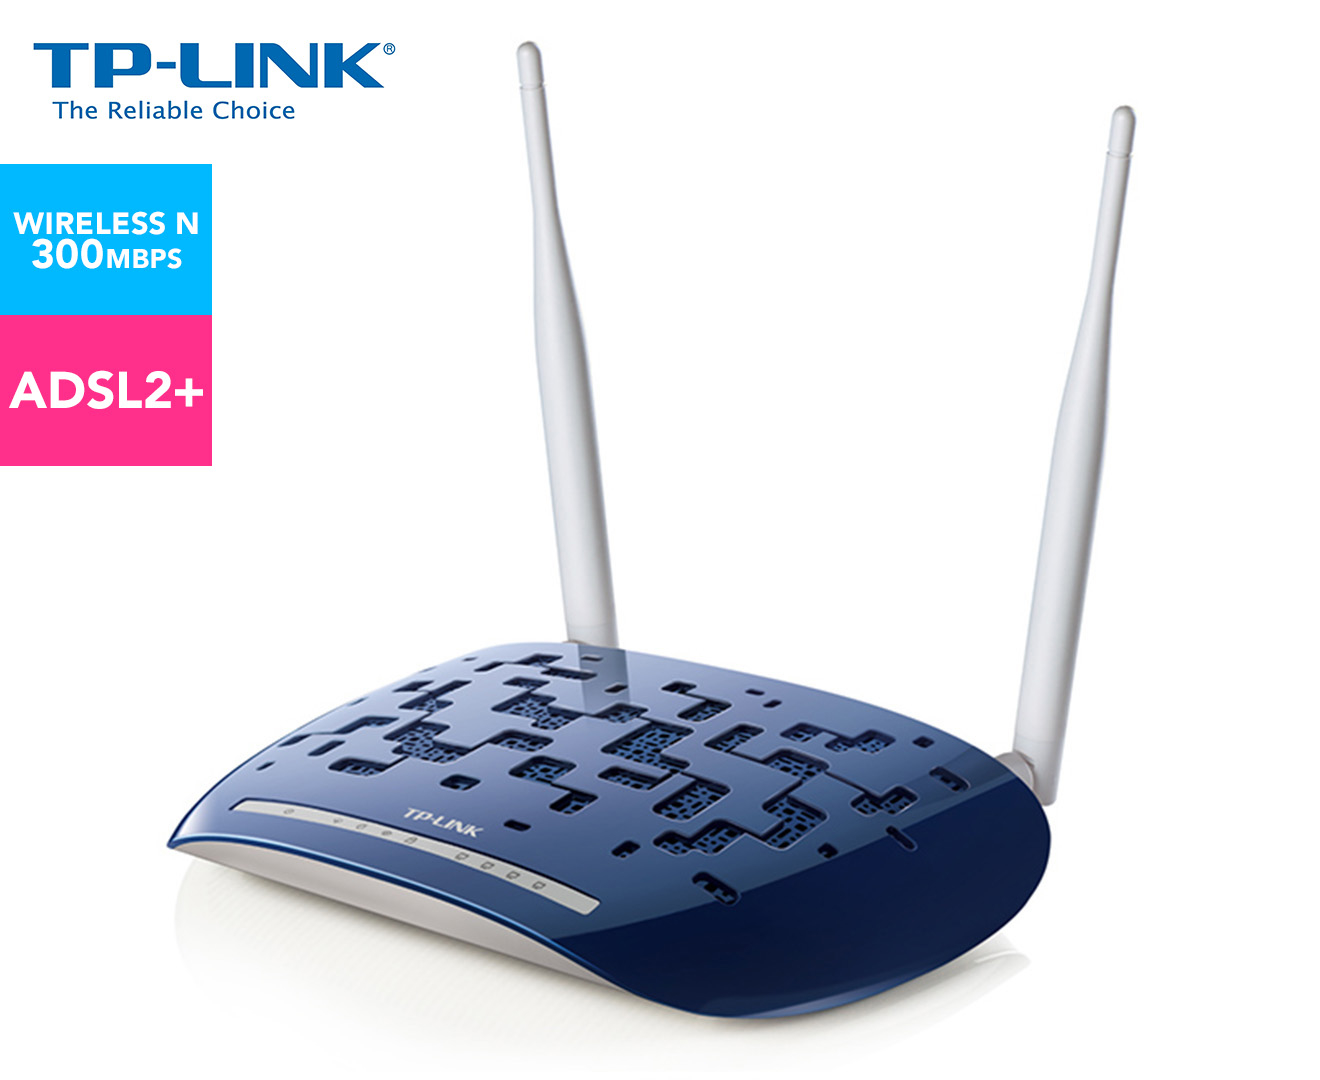 TP-Link TD-W8960N Wireless-N ADSL2+ Modem Router - Blue